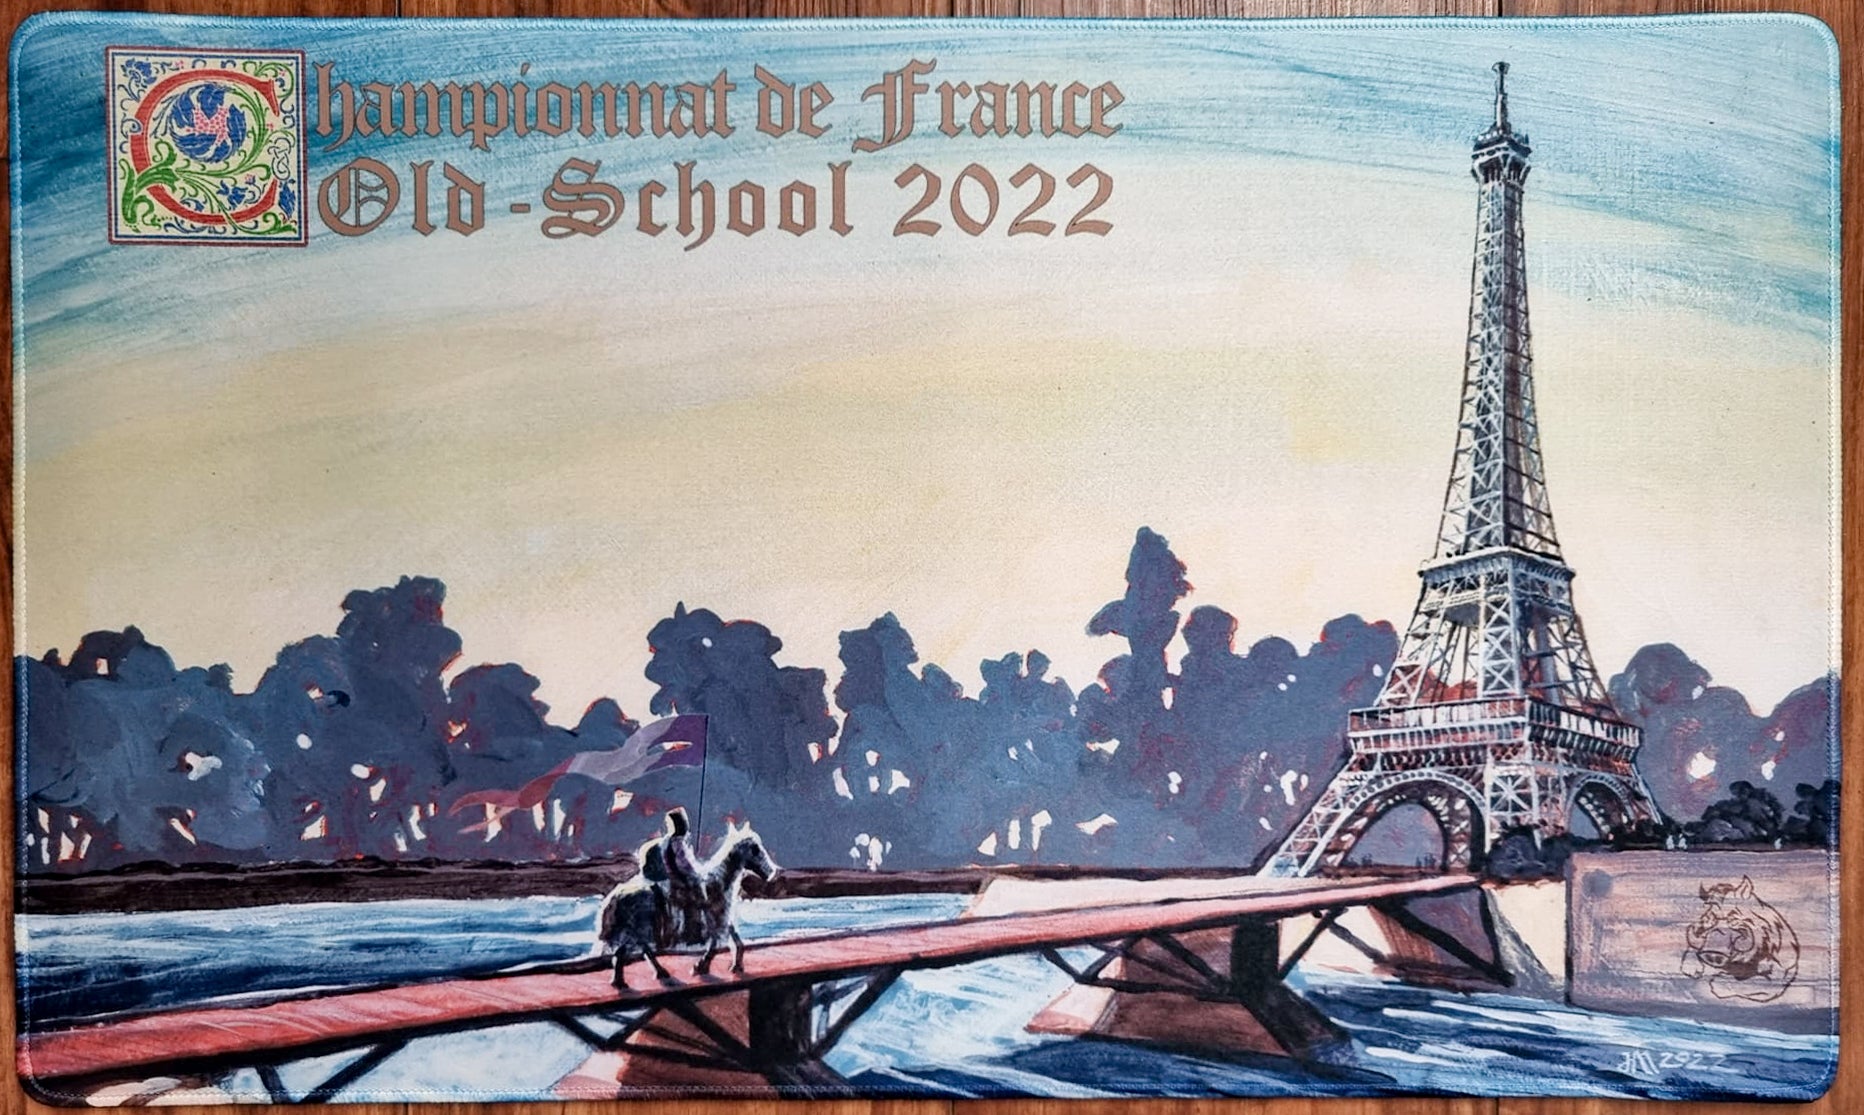 Eiffel Tower Moat - Jeff A. Menges - Championnat de France Old-School 2022 - Embroidered - MTG Playmat